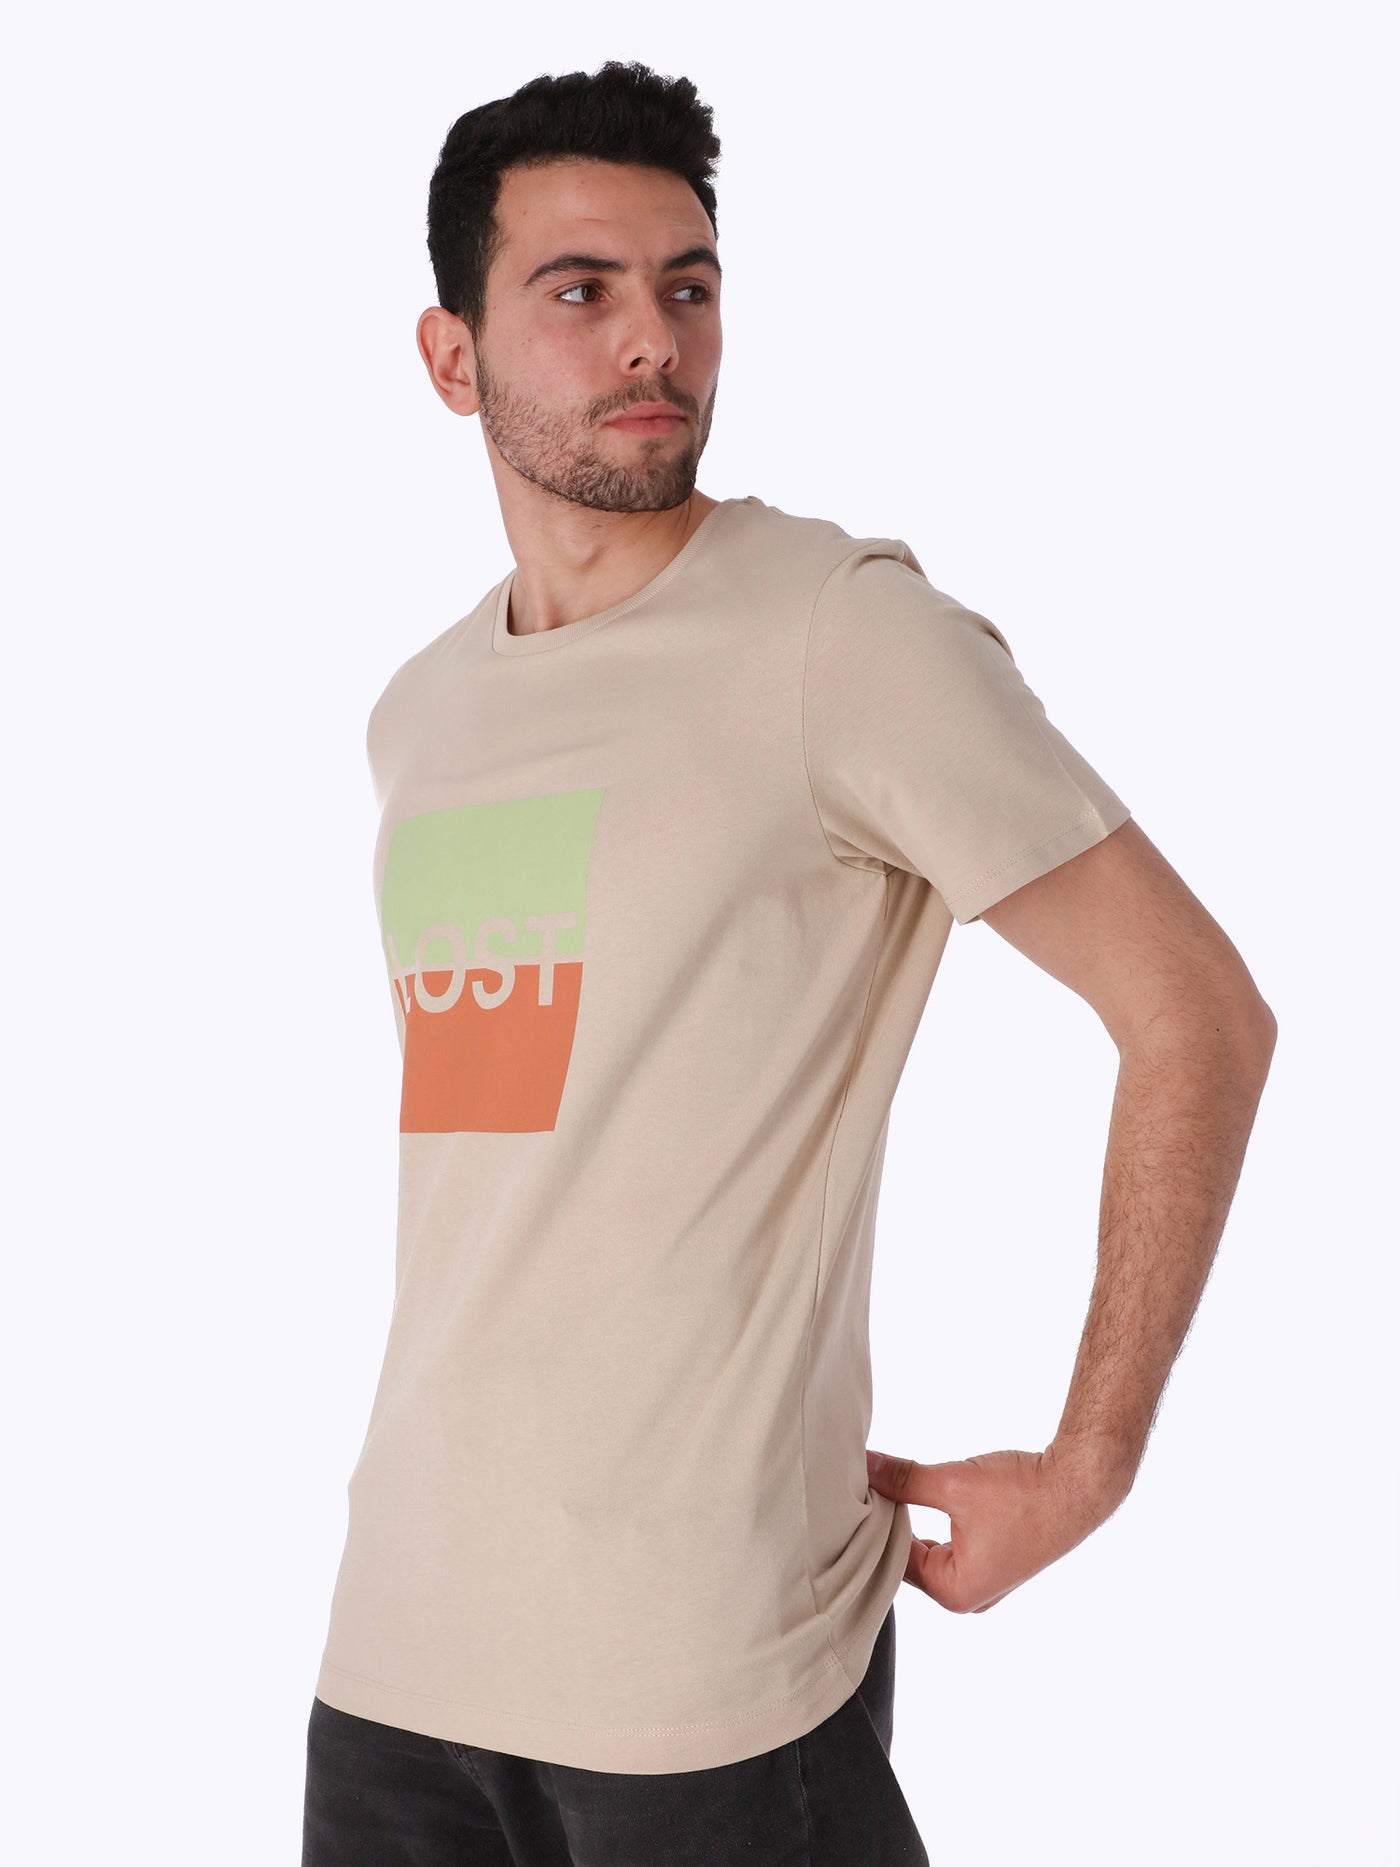 T-Shirt - Front Print - Short Sleeve